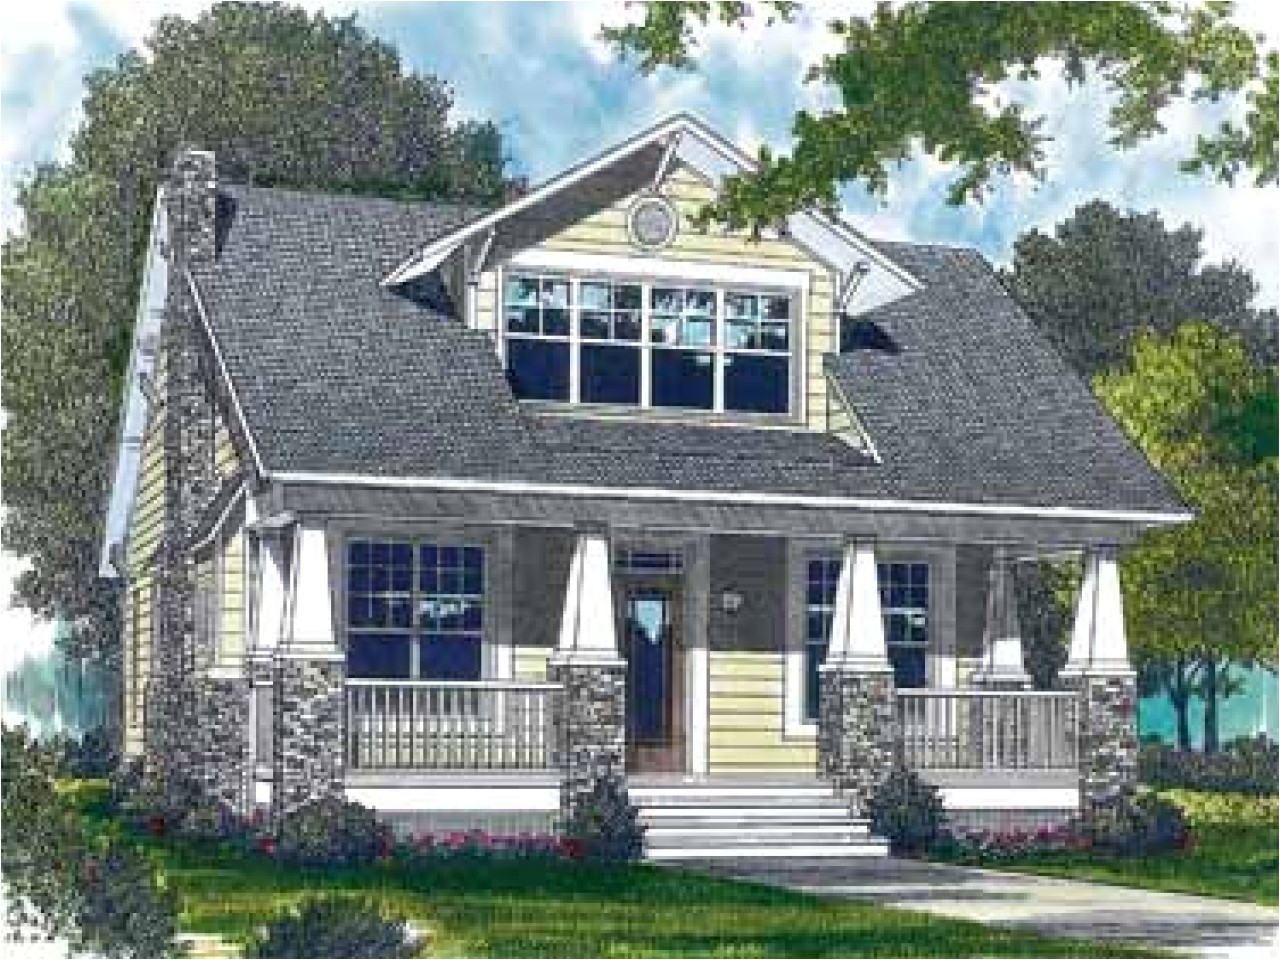 125f923da6858b55 craftsman style bungalow house plans craftsman style porch columns